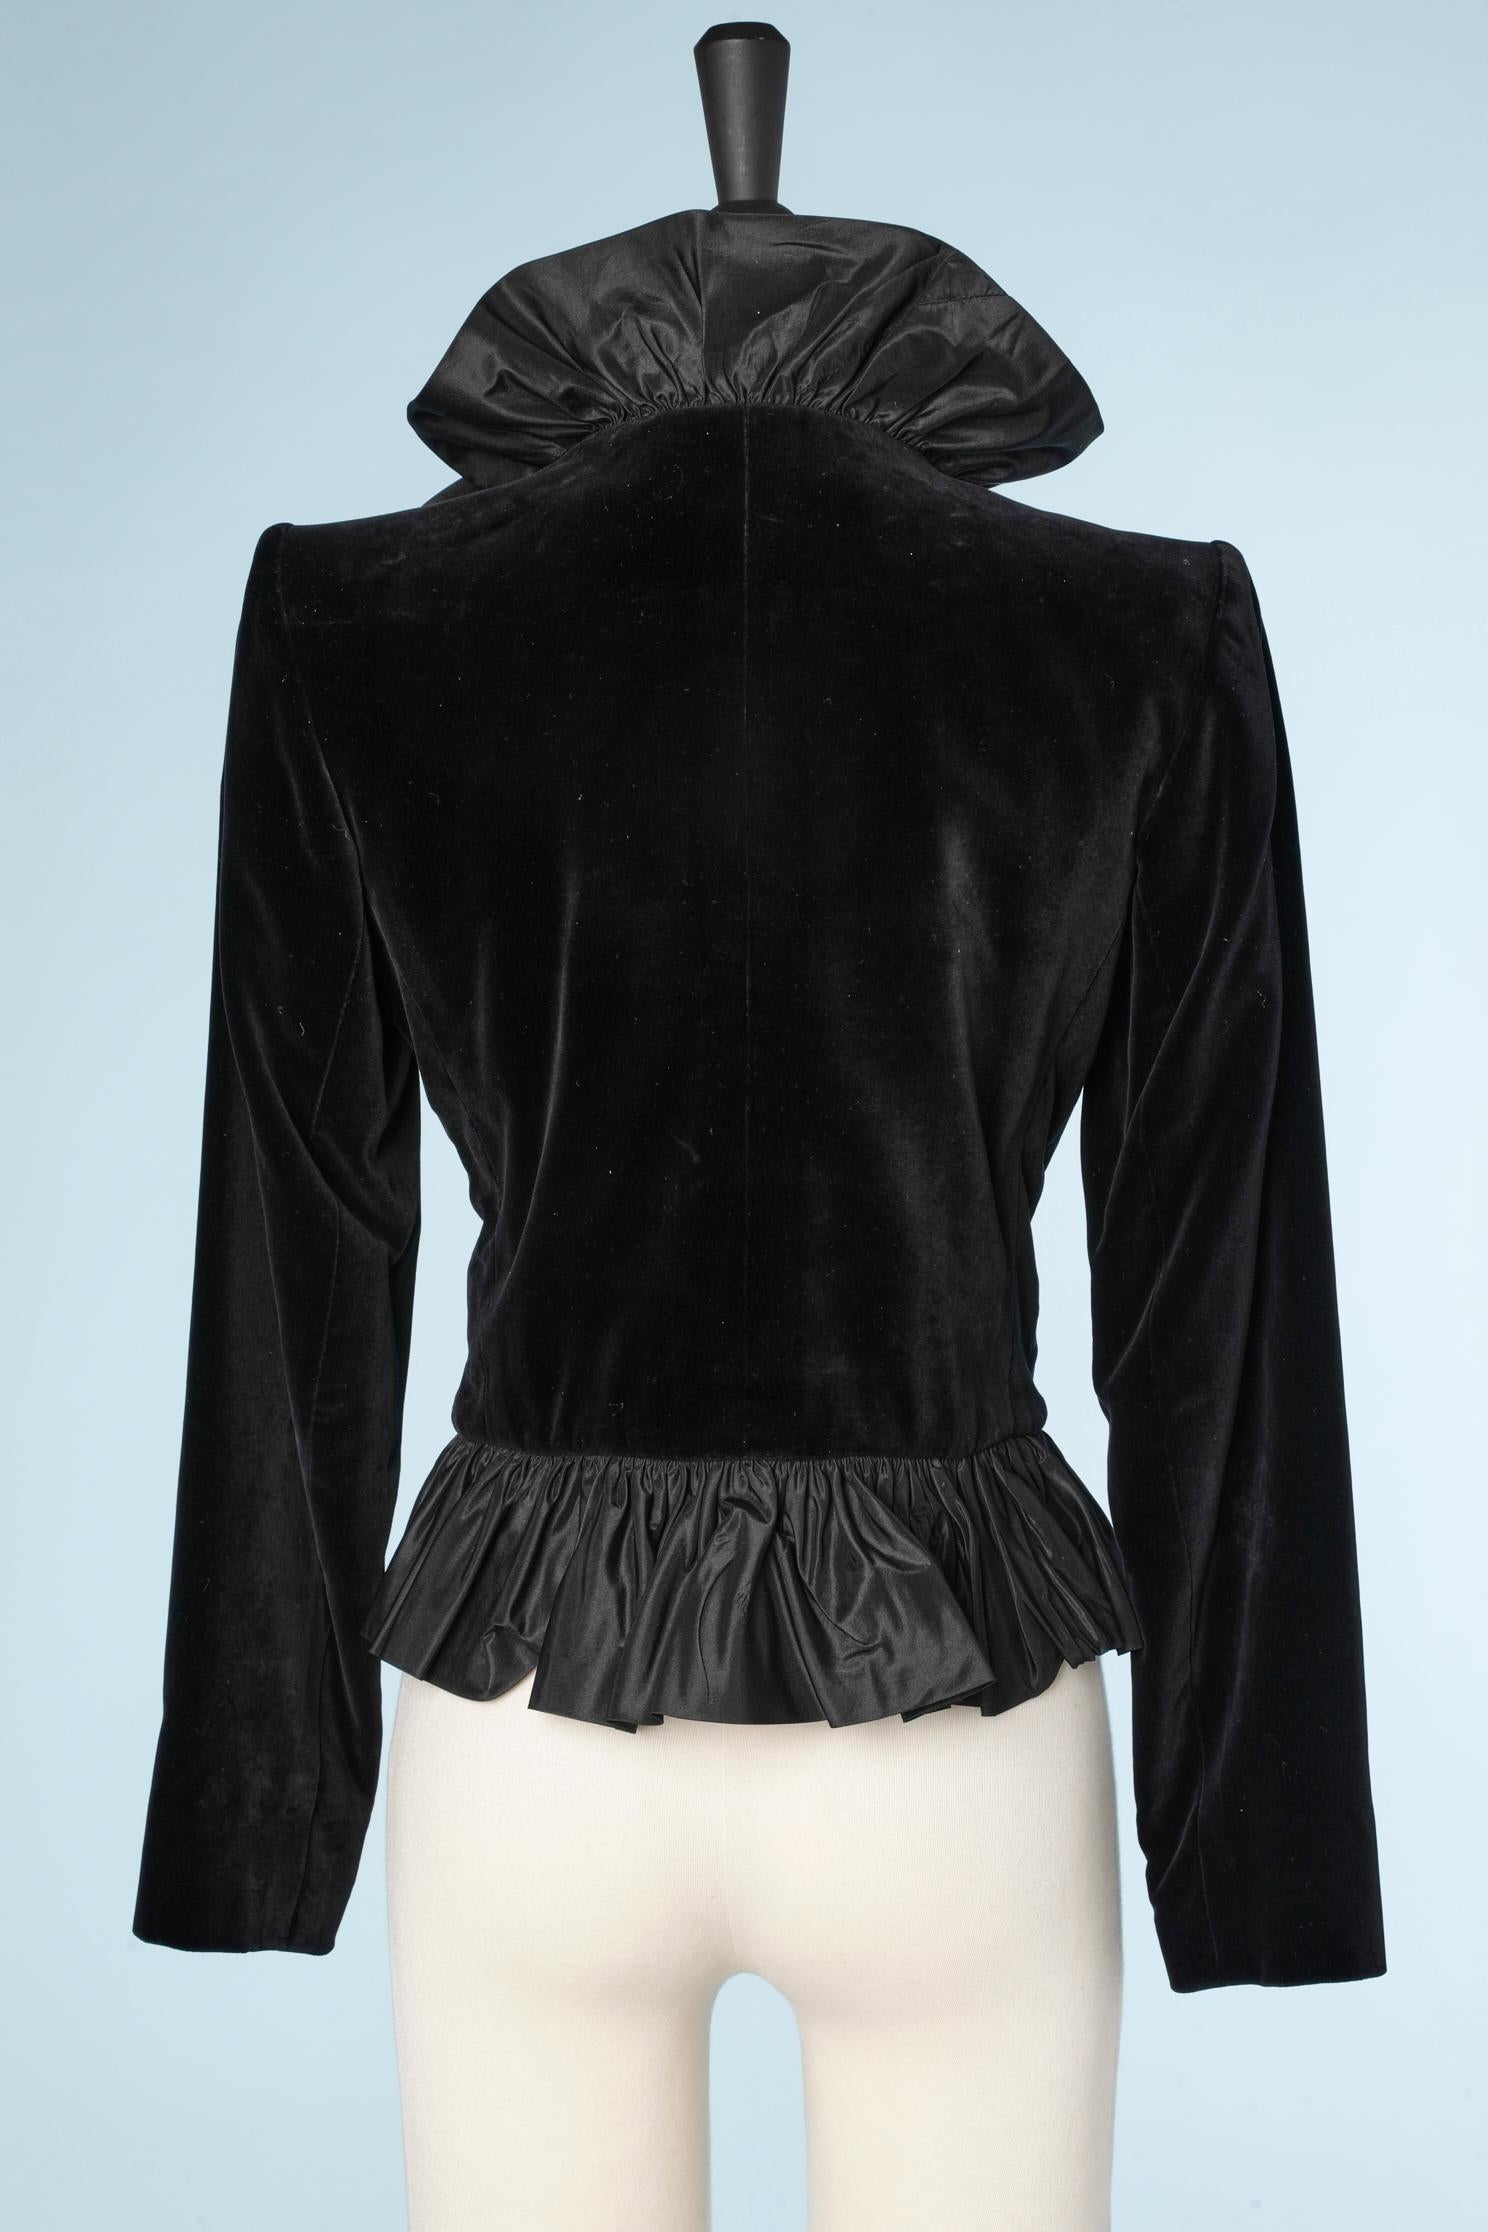 Black velvet jacket with black taffetas ruffles  YSL Rive Gauche  2